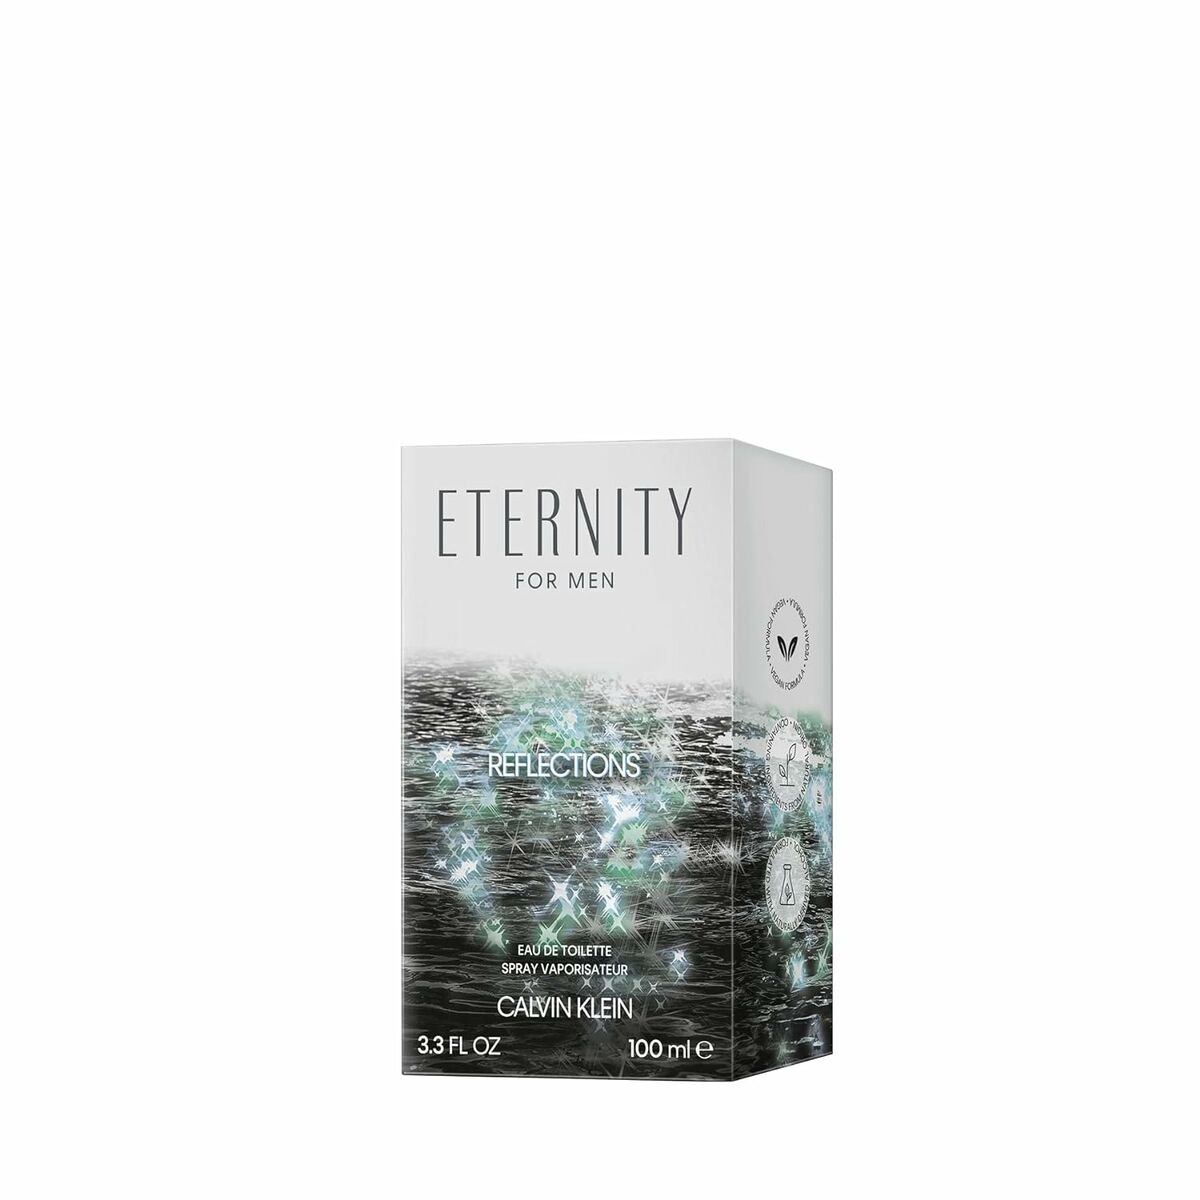 Parfum Homme Calvin Klein Eternity Reflections 100 ml